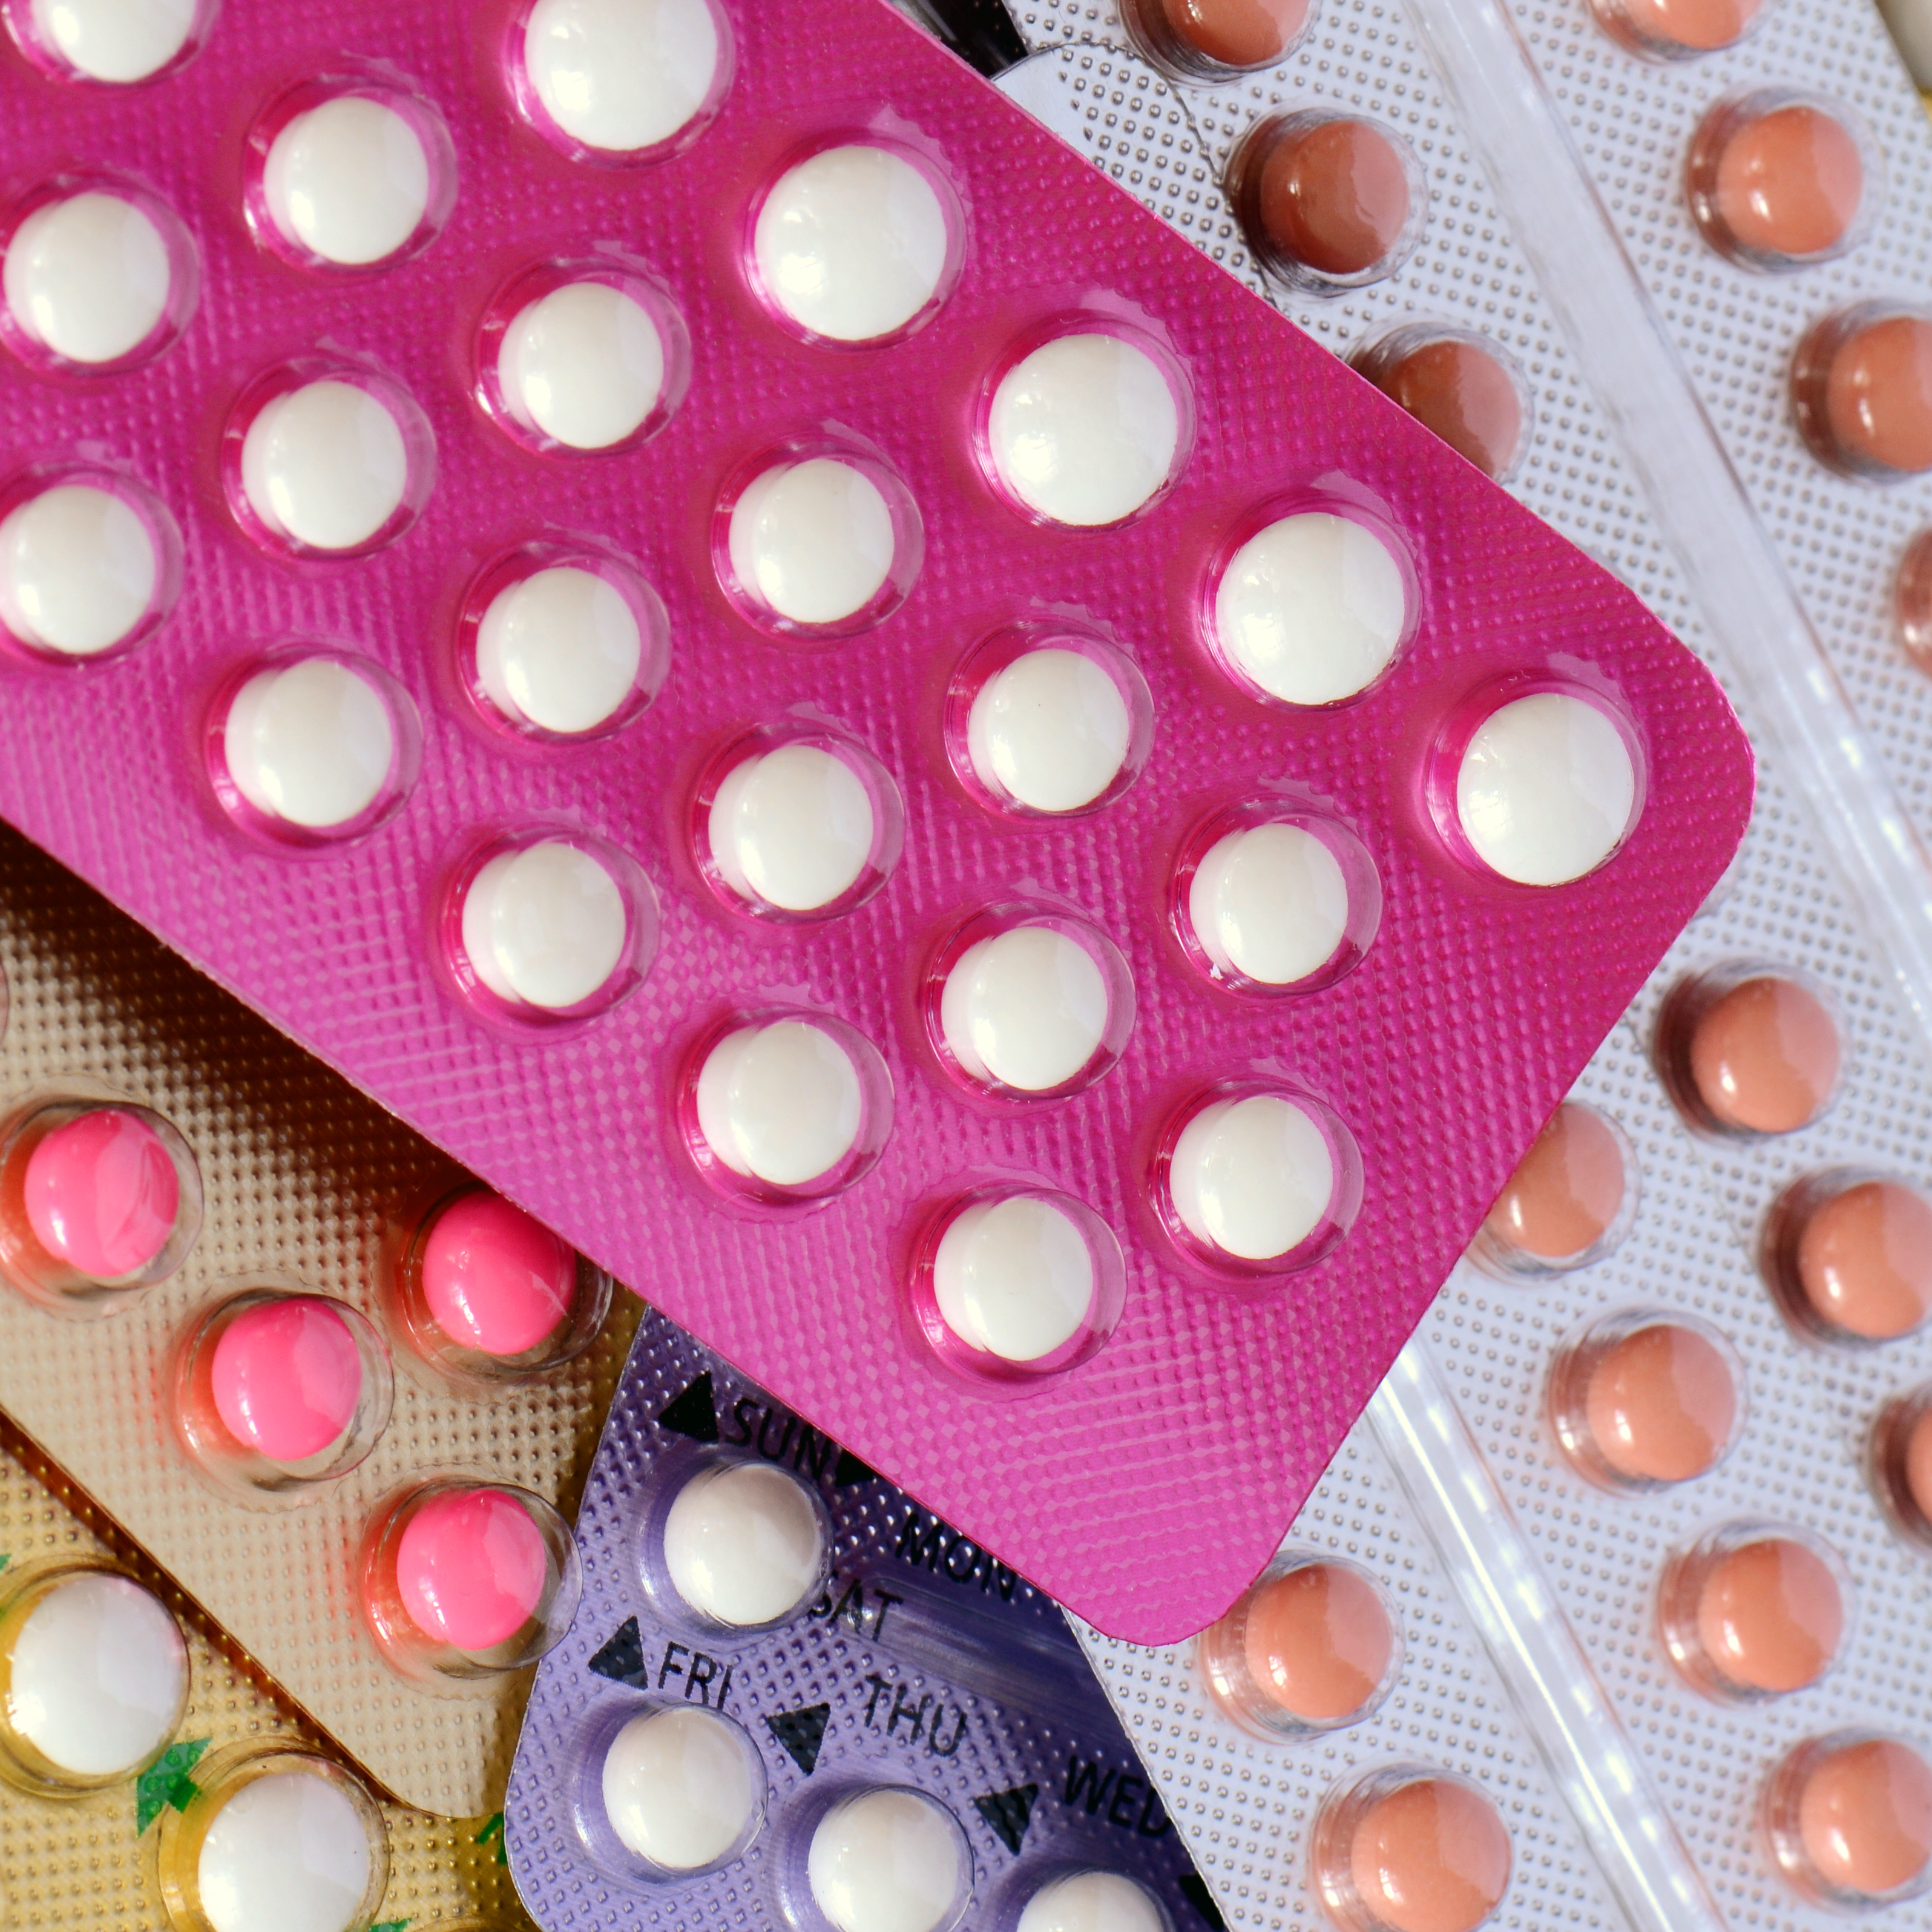 Birth Control Pill Risks: What To Do | Sara Gottfried MD